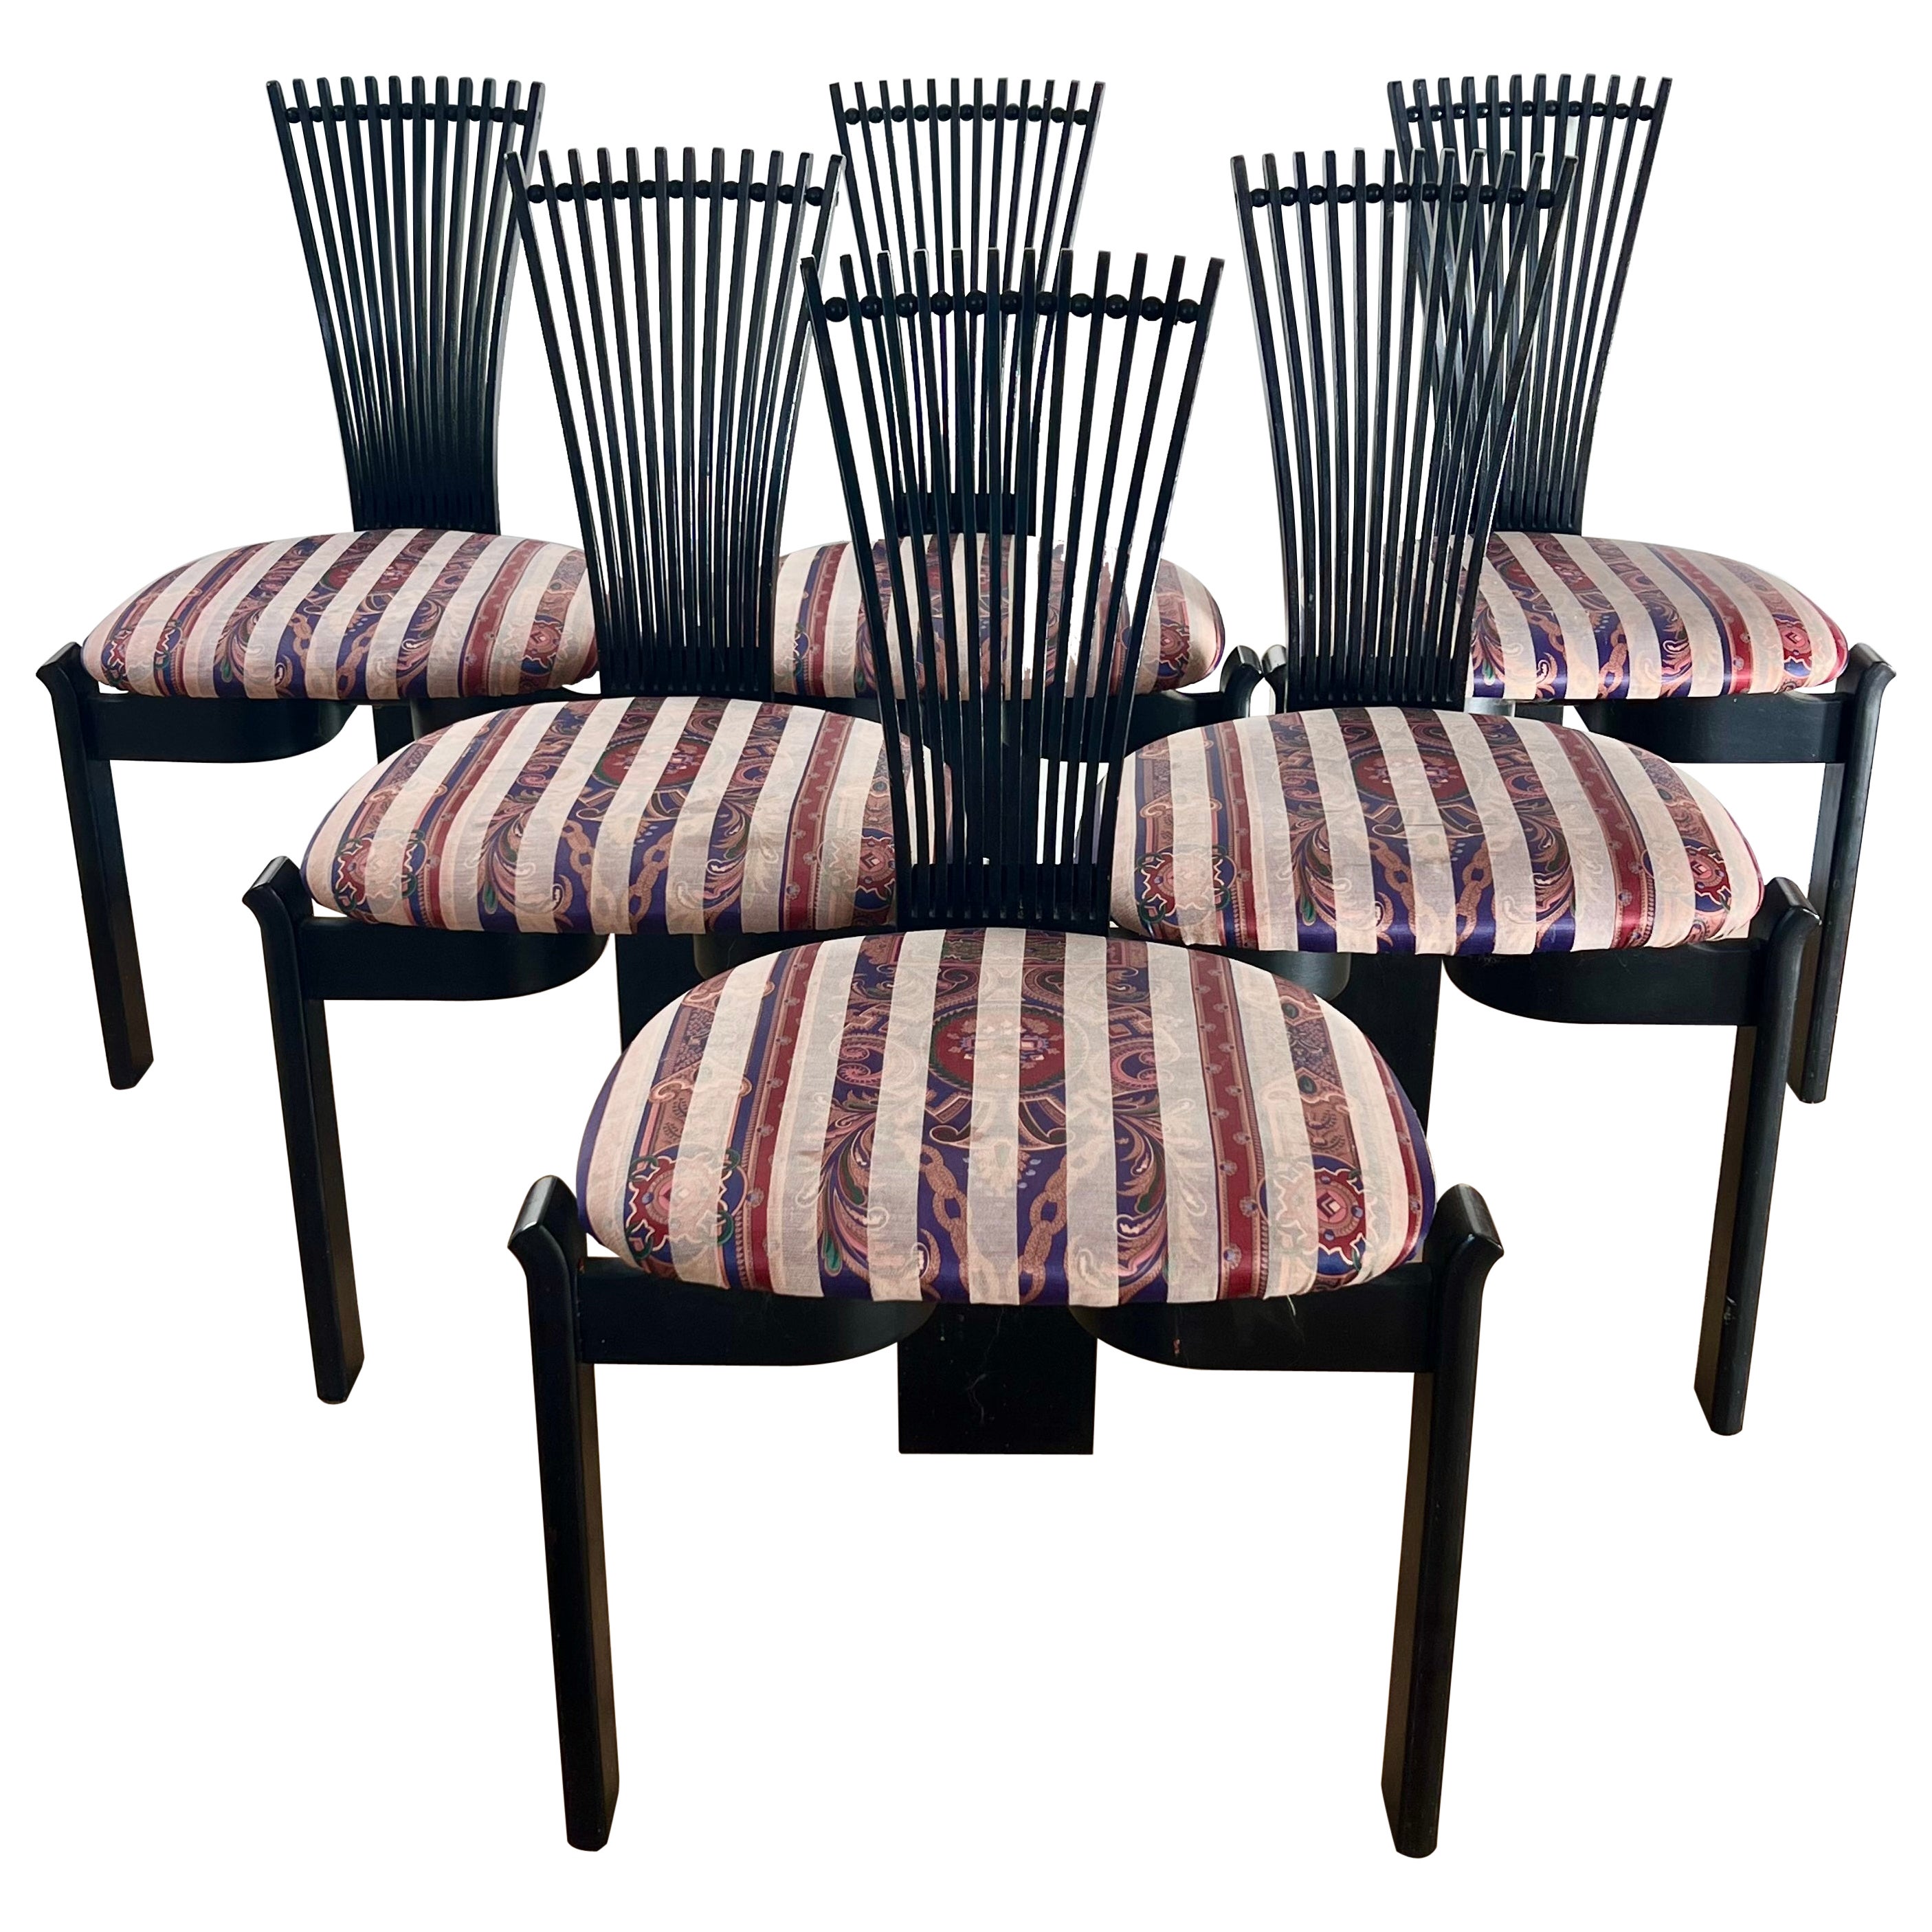 Danish Modern Set of 6 Torstein Nilsen for Westnofa Dining Chairs, 1970s